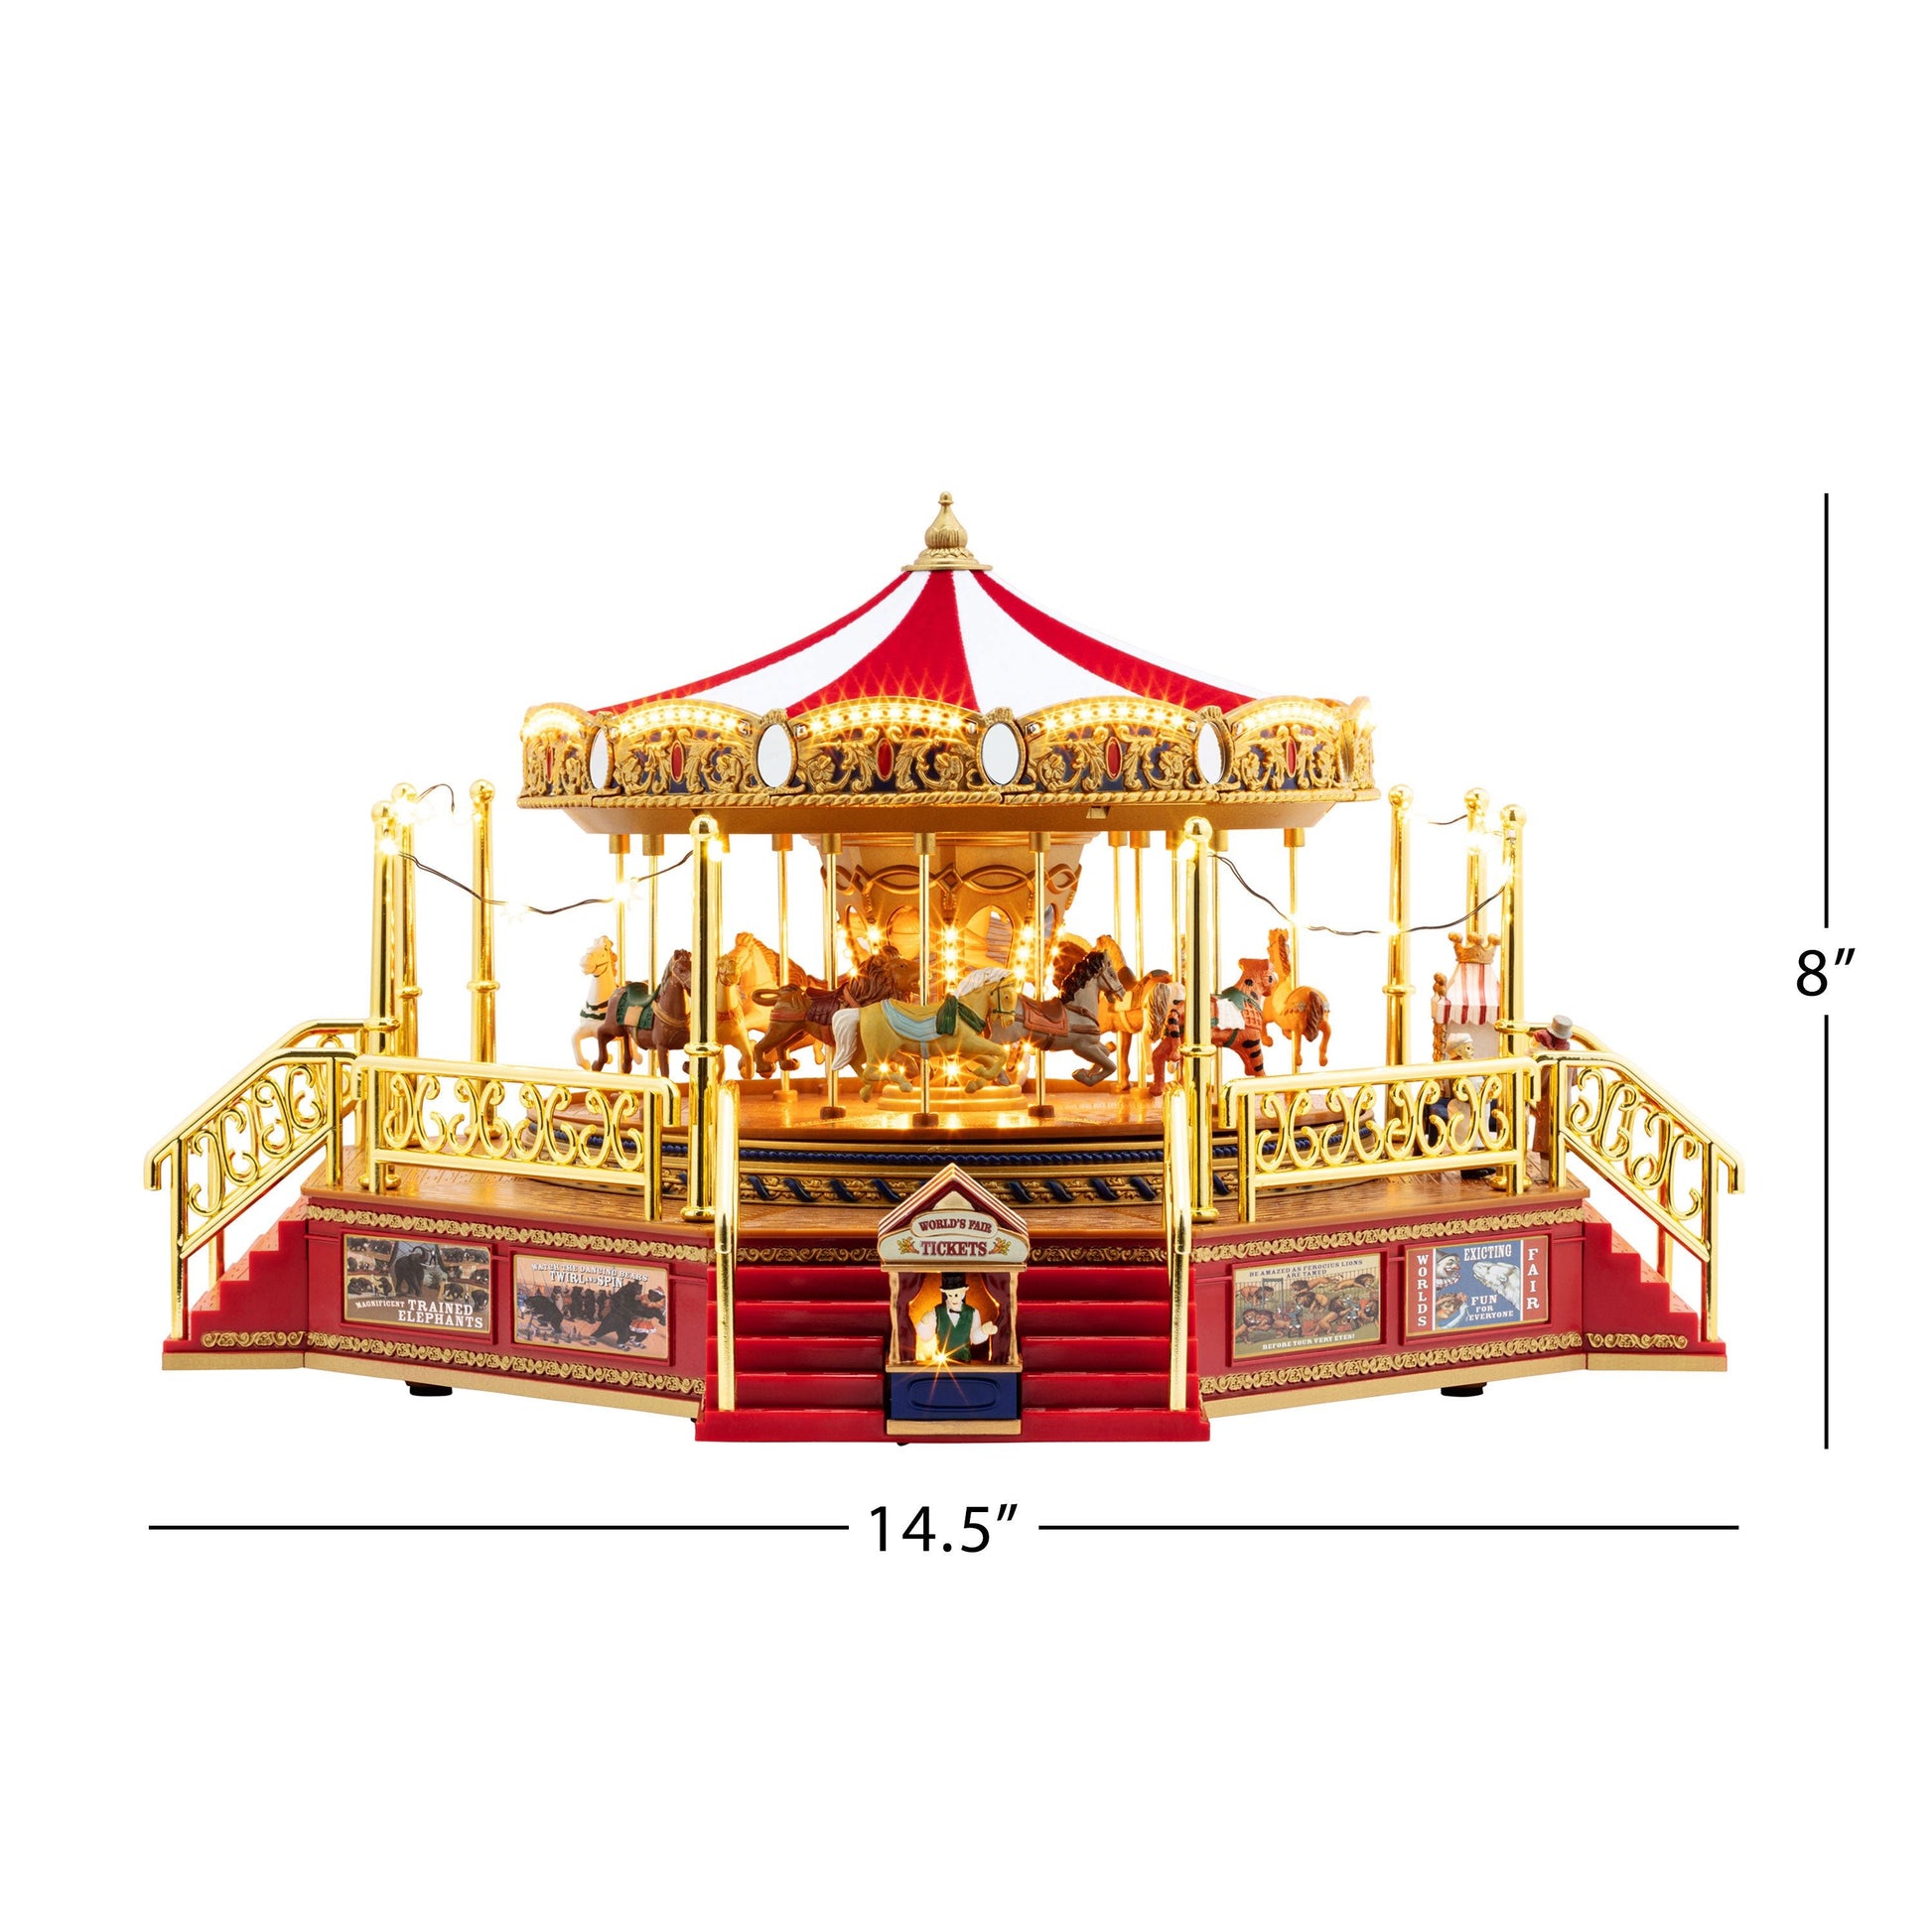 90th Anniversary Collection - Animated & Musical World's Fair Boardwalk Carousel - Mr. Christmas